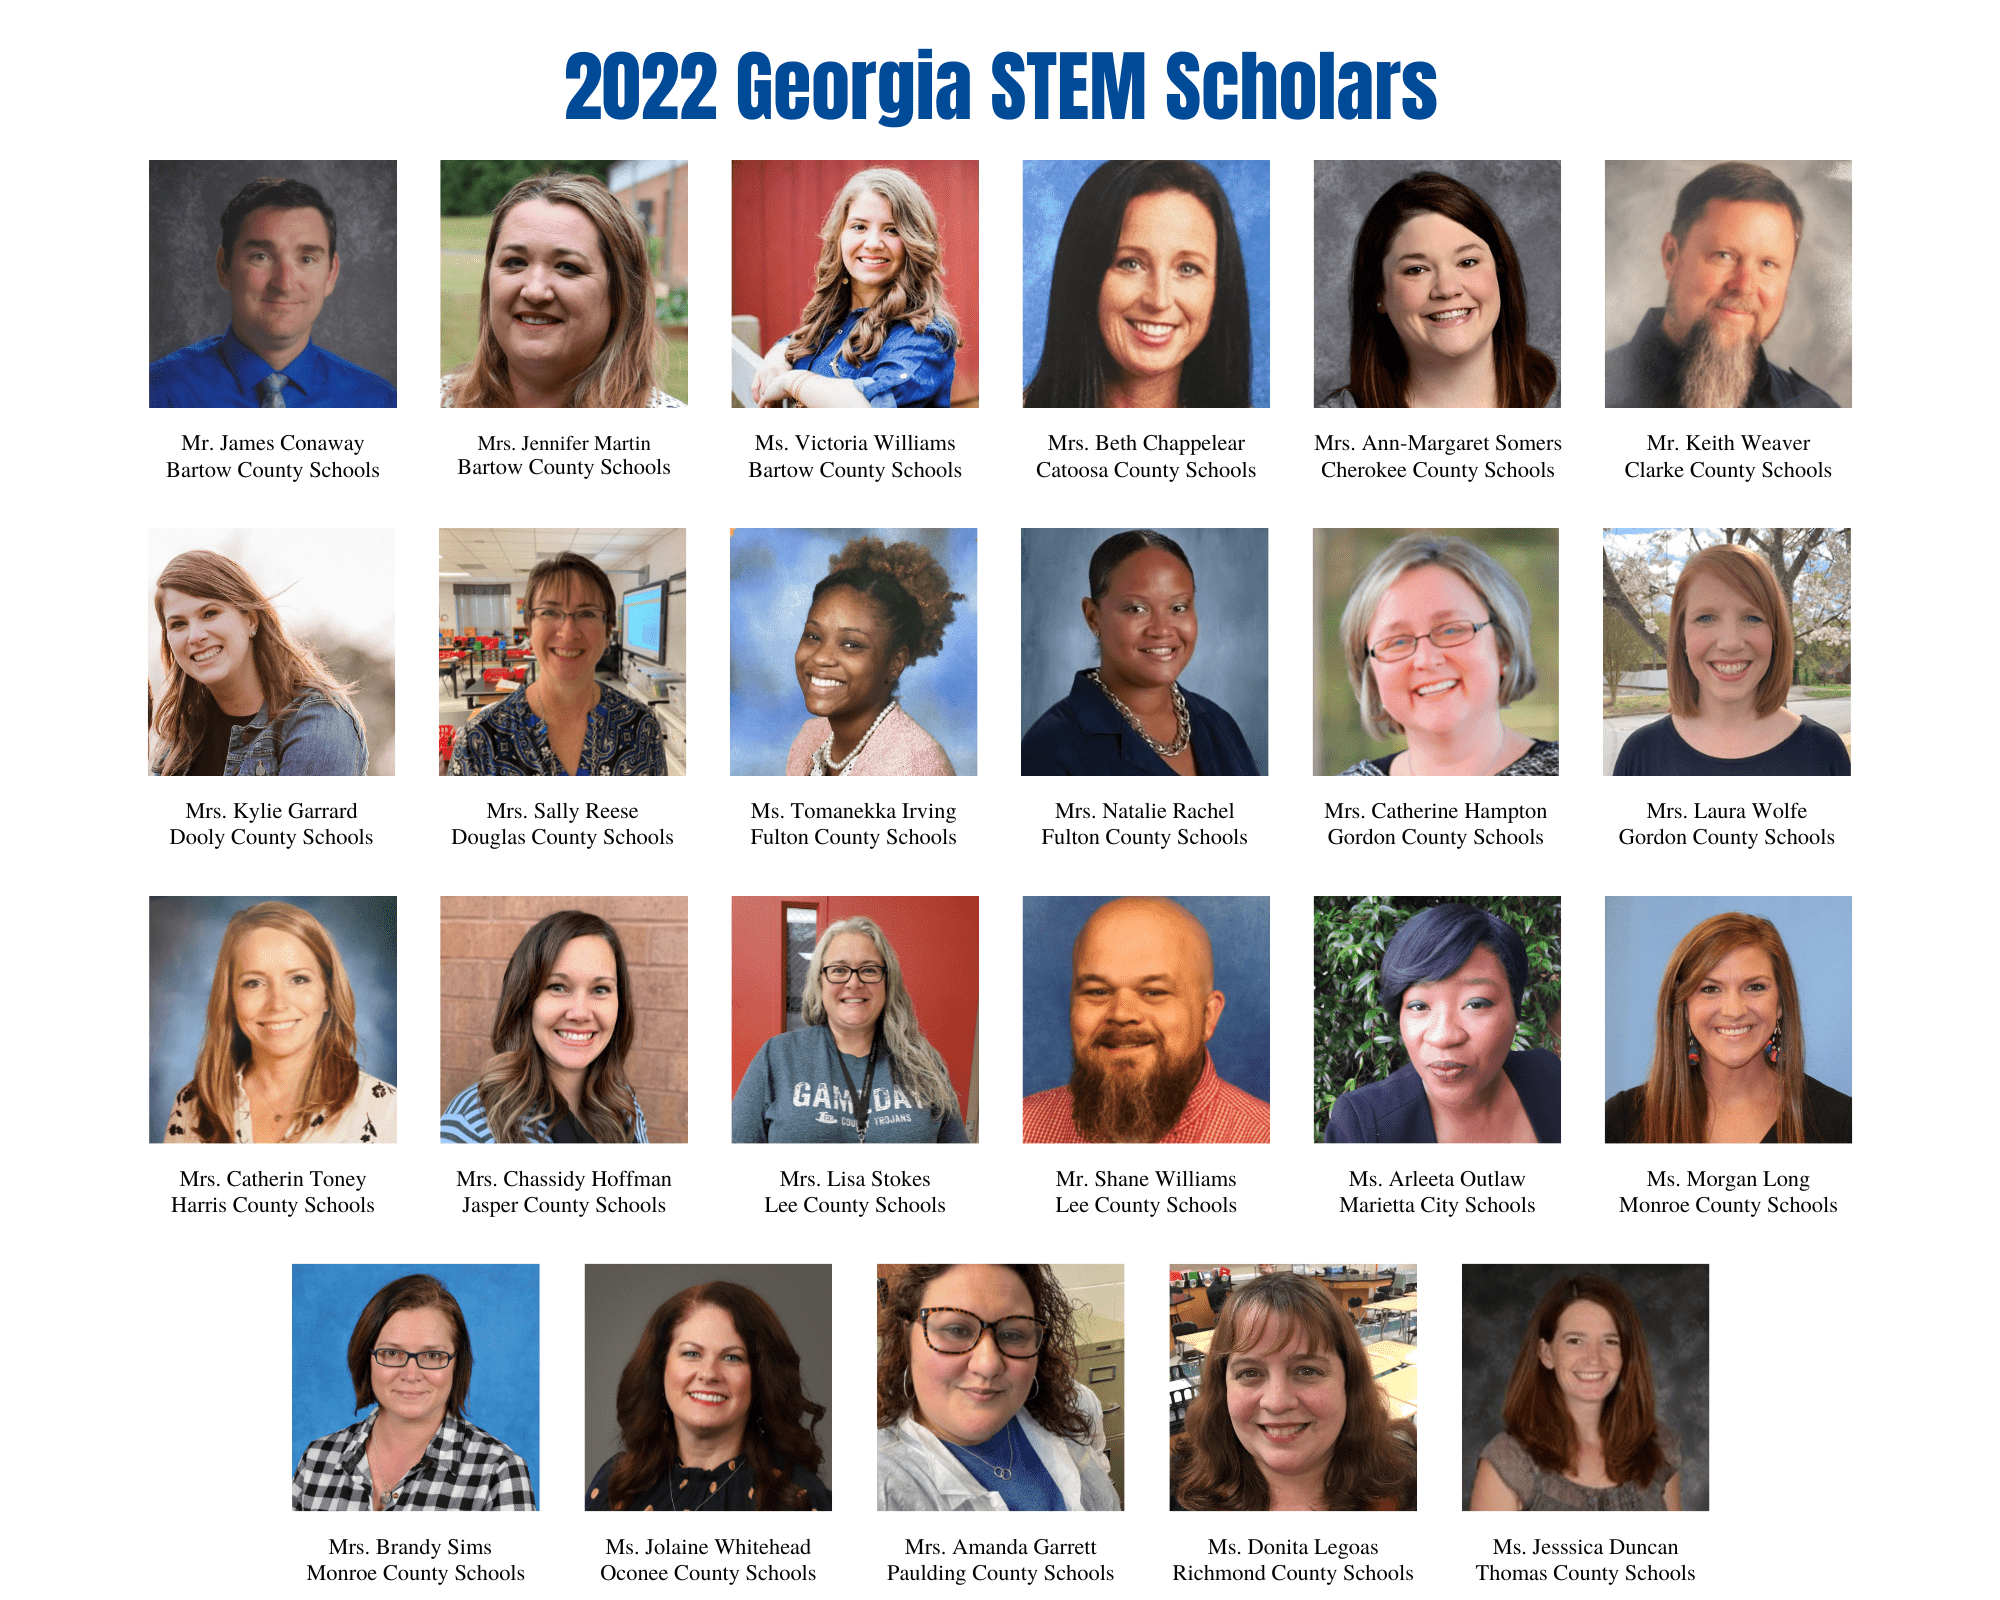 FY 22 Georgia STEM Scholars